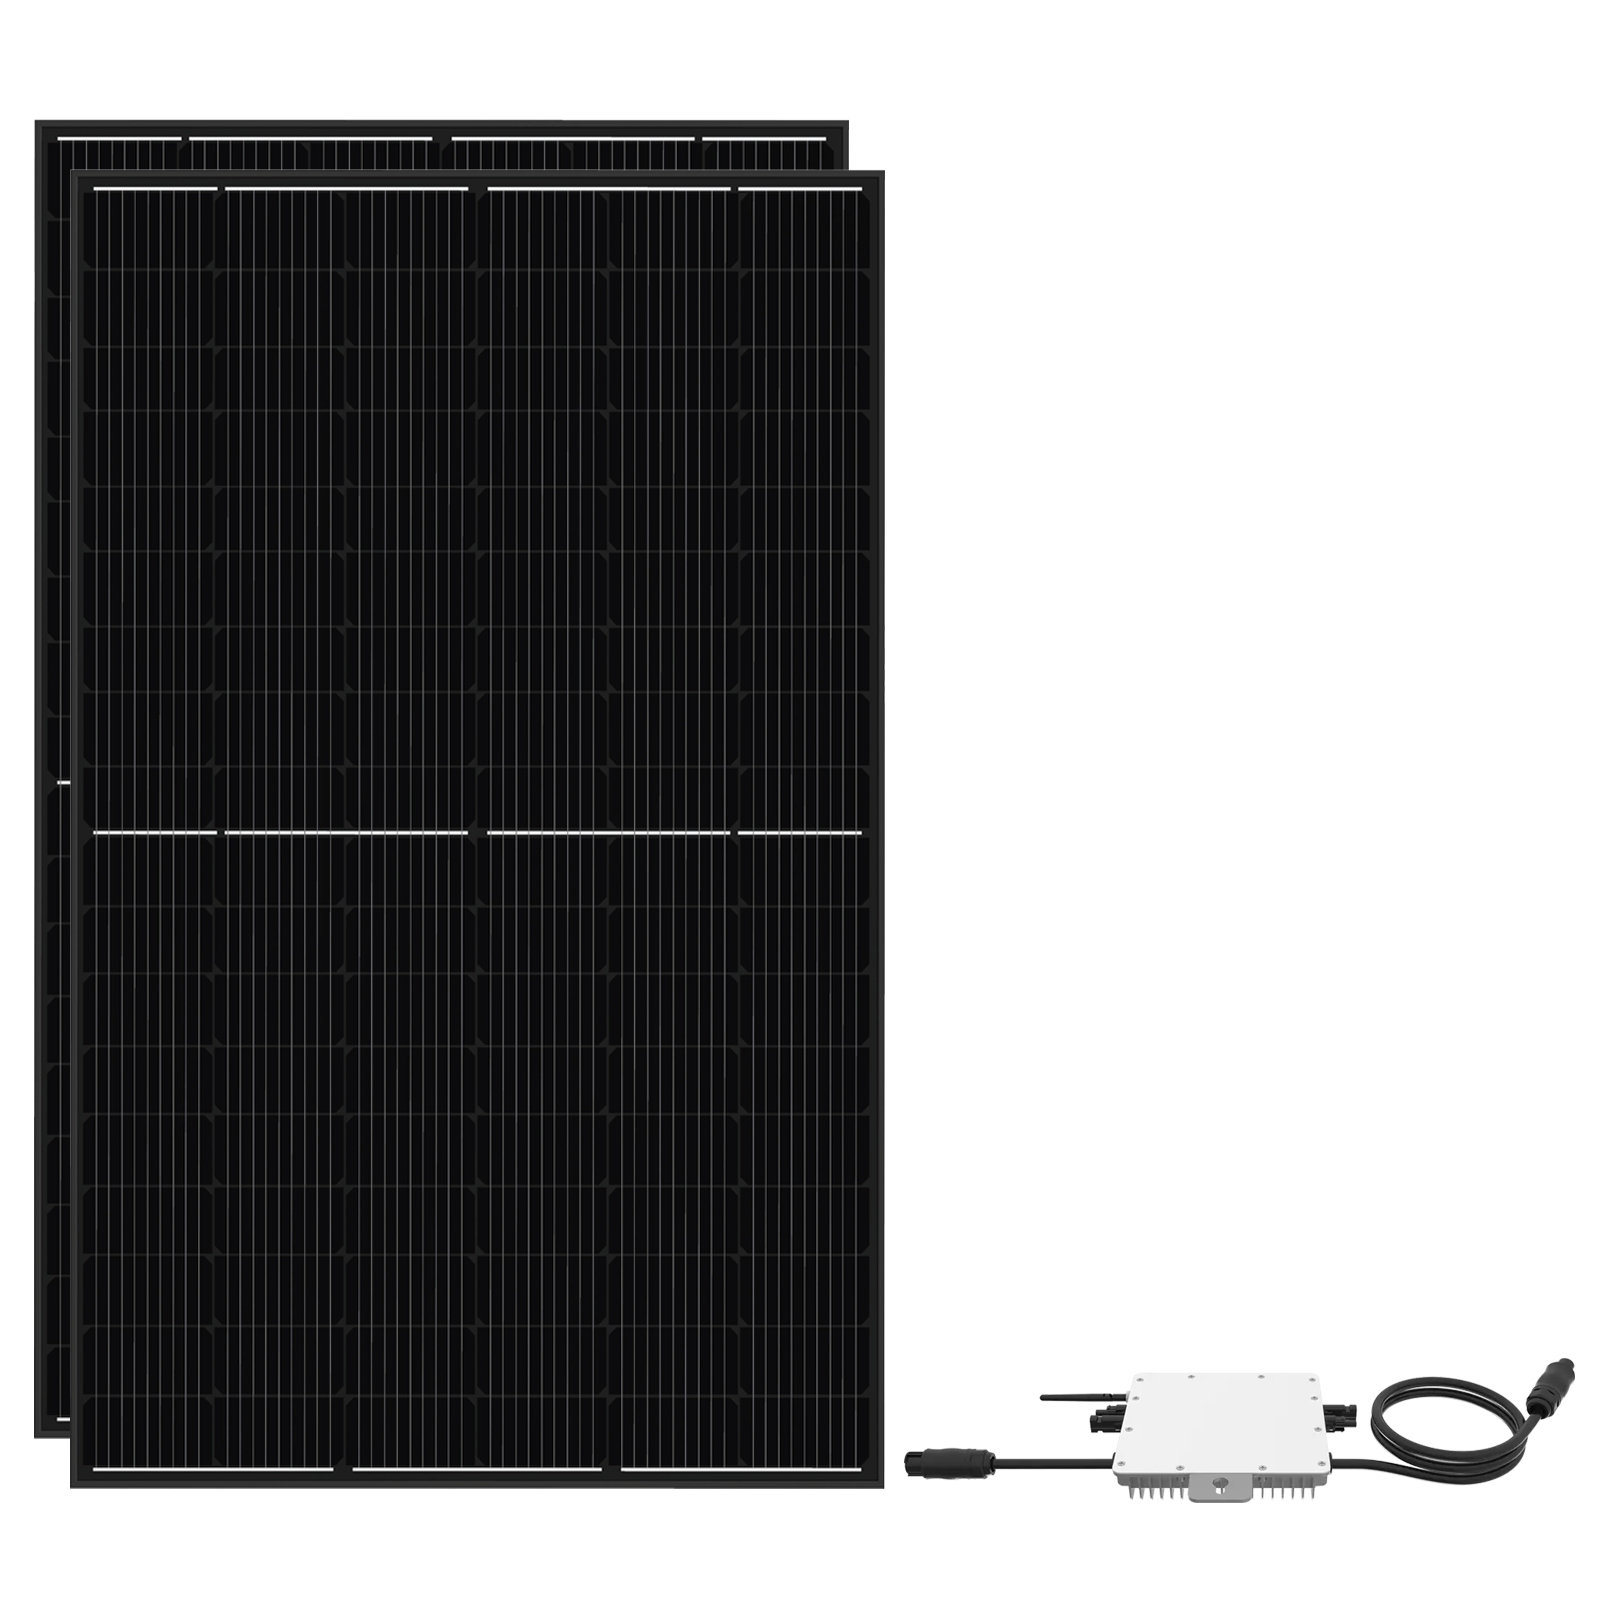 Solar-PV 800 Balkonkraftwerke Komplettset – Solar Anlage Balkonsystem